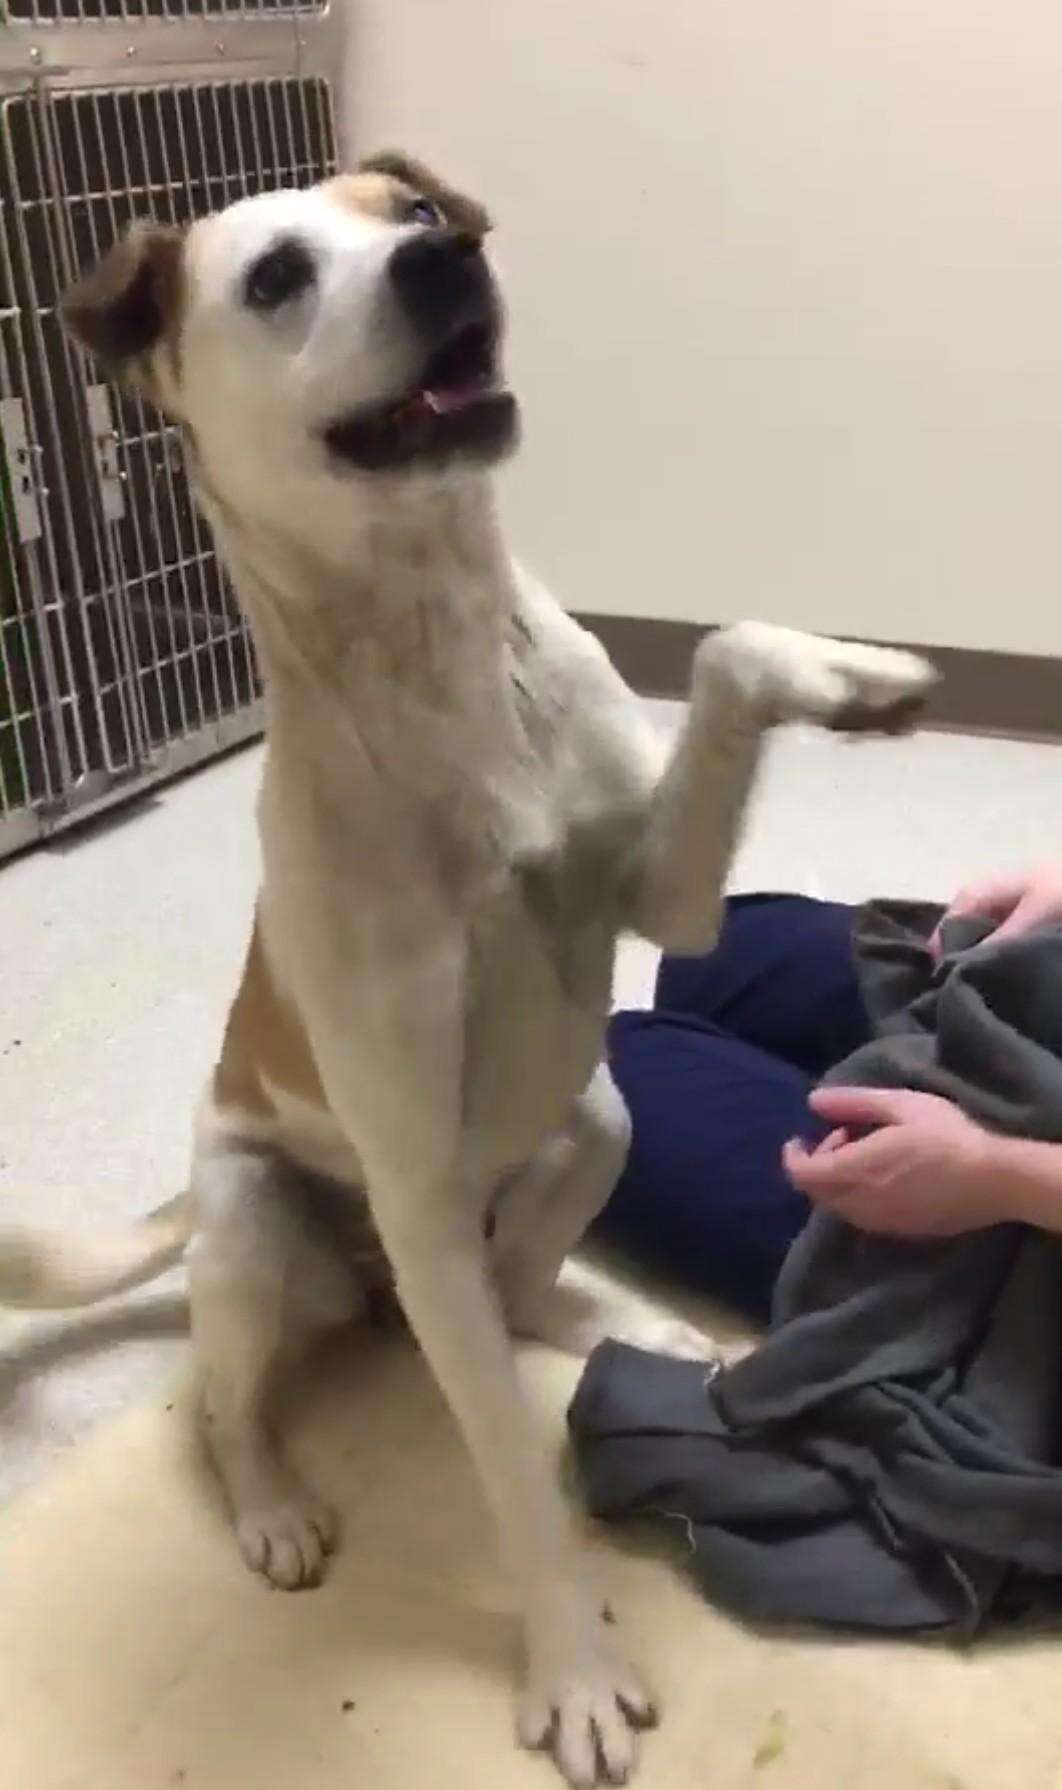 Dog lifting his paw up